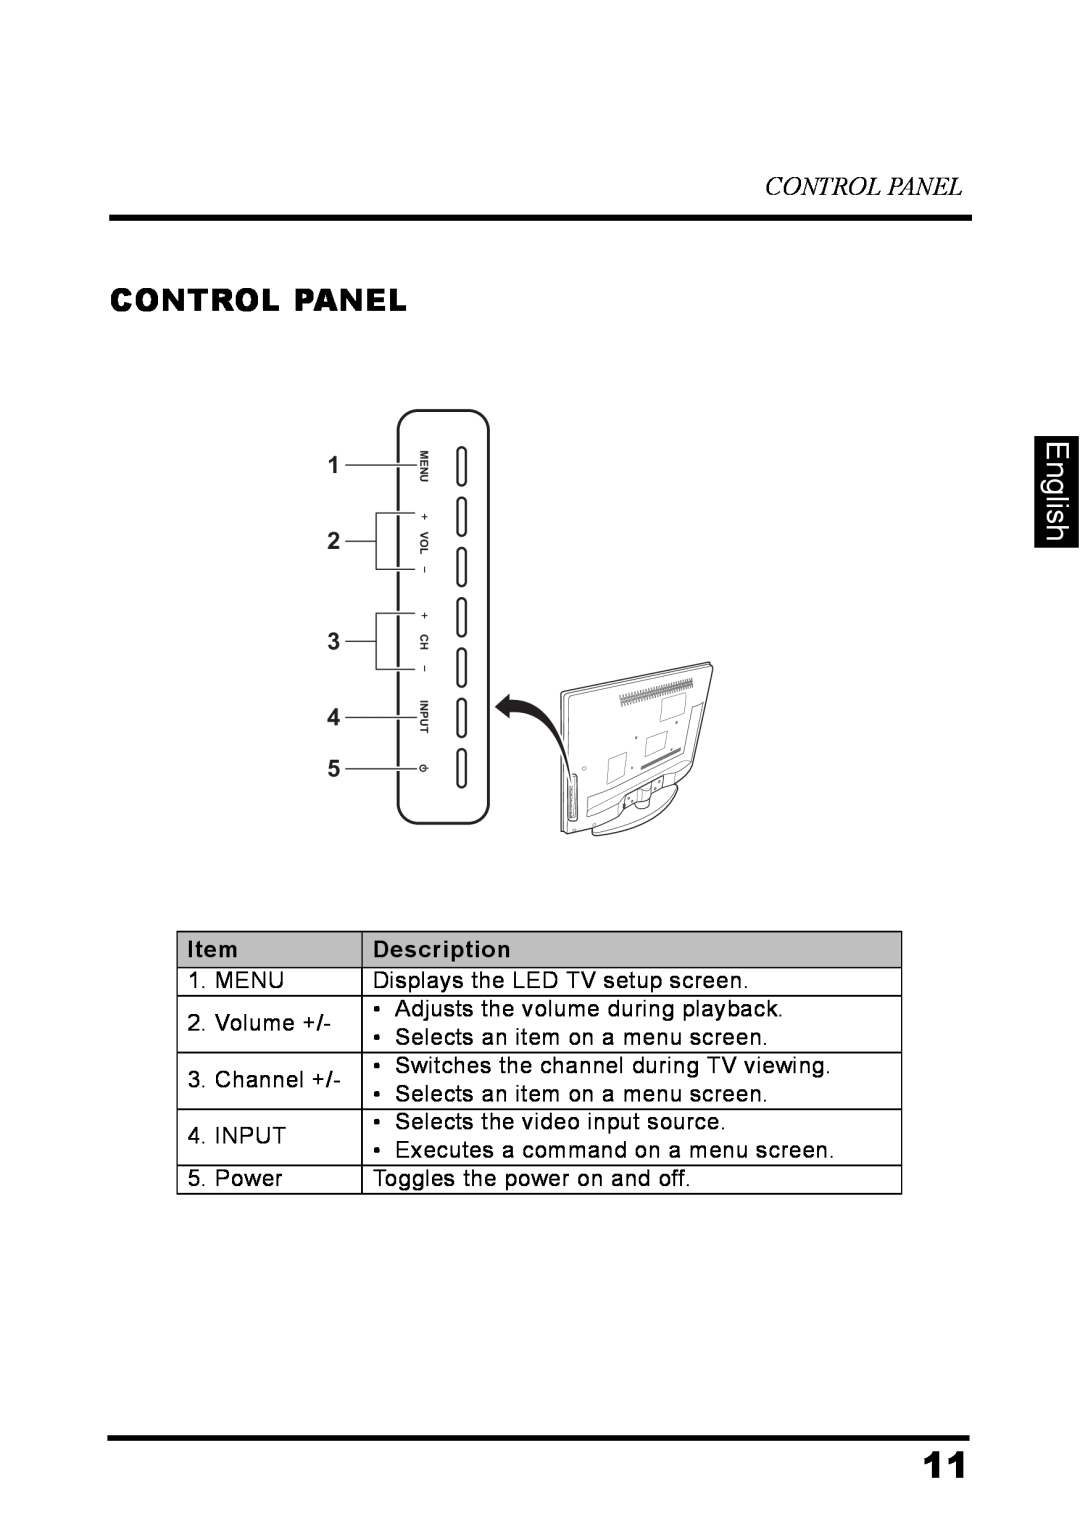 Westinghouse LD-3237 user manual Control Panel, English 